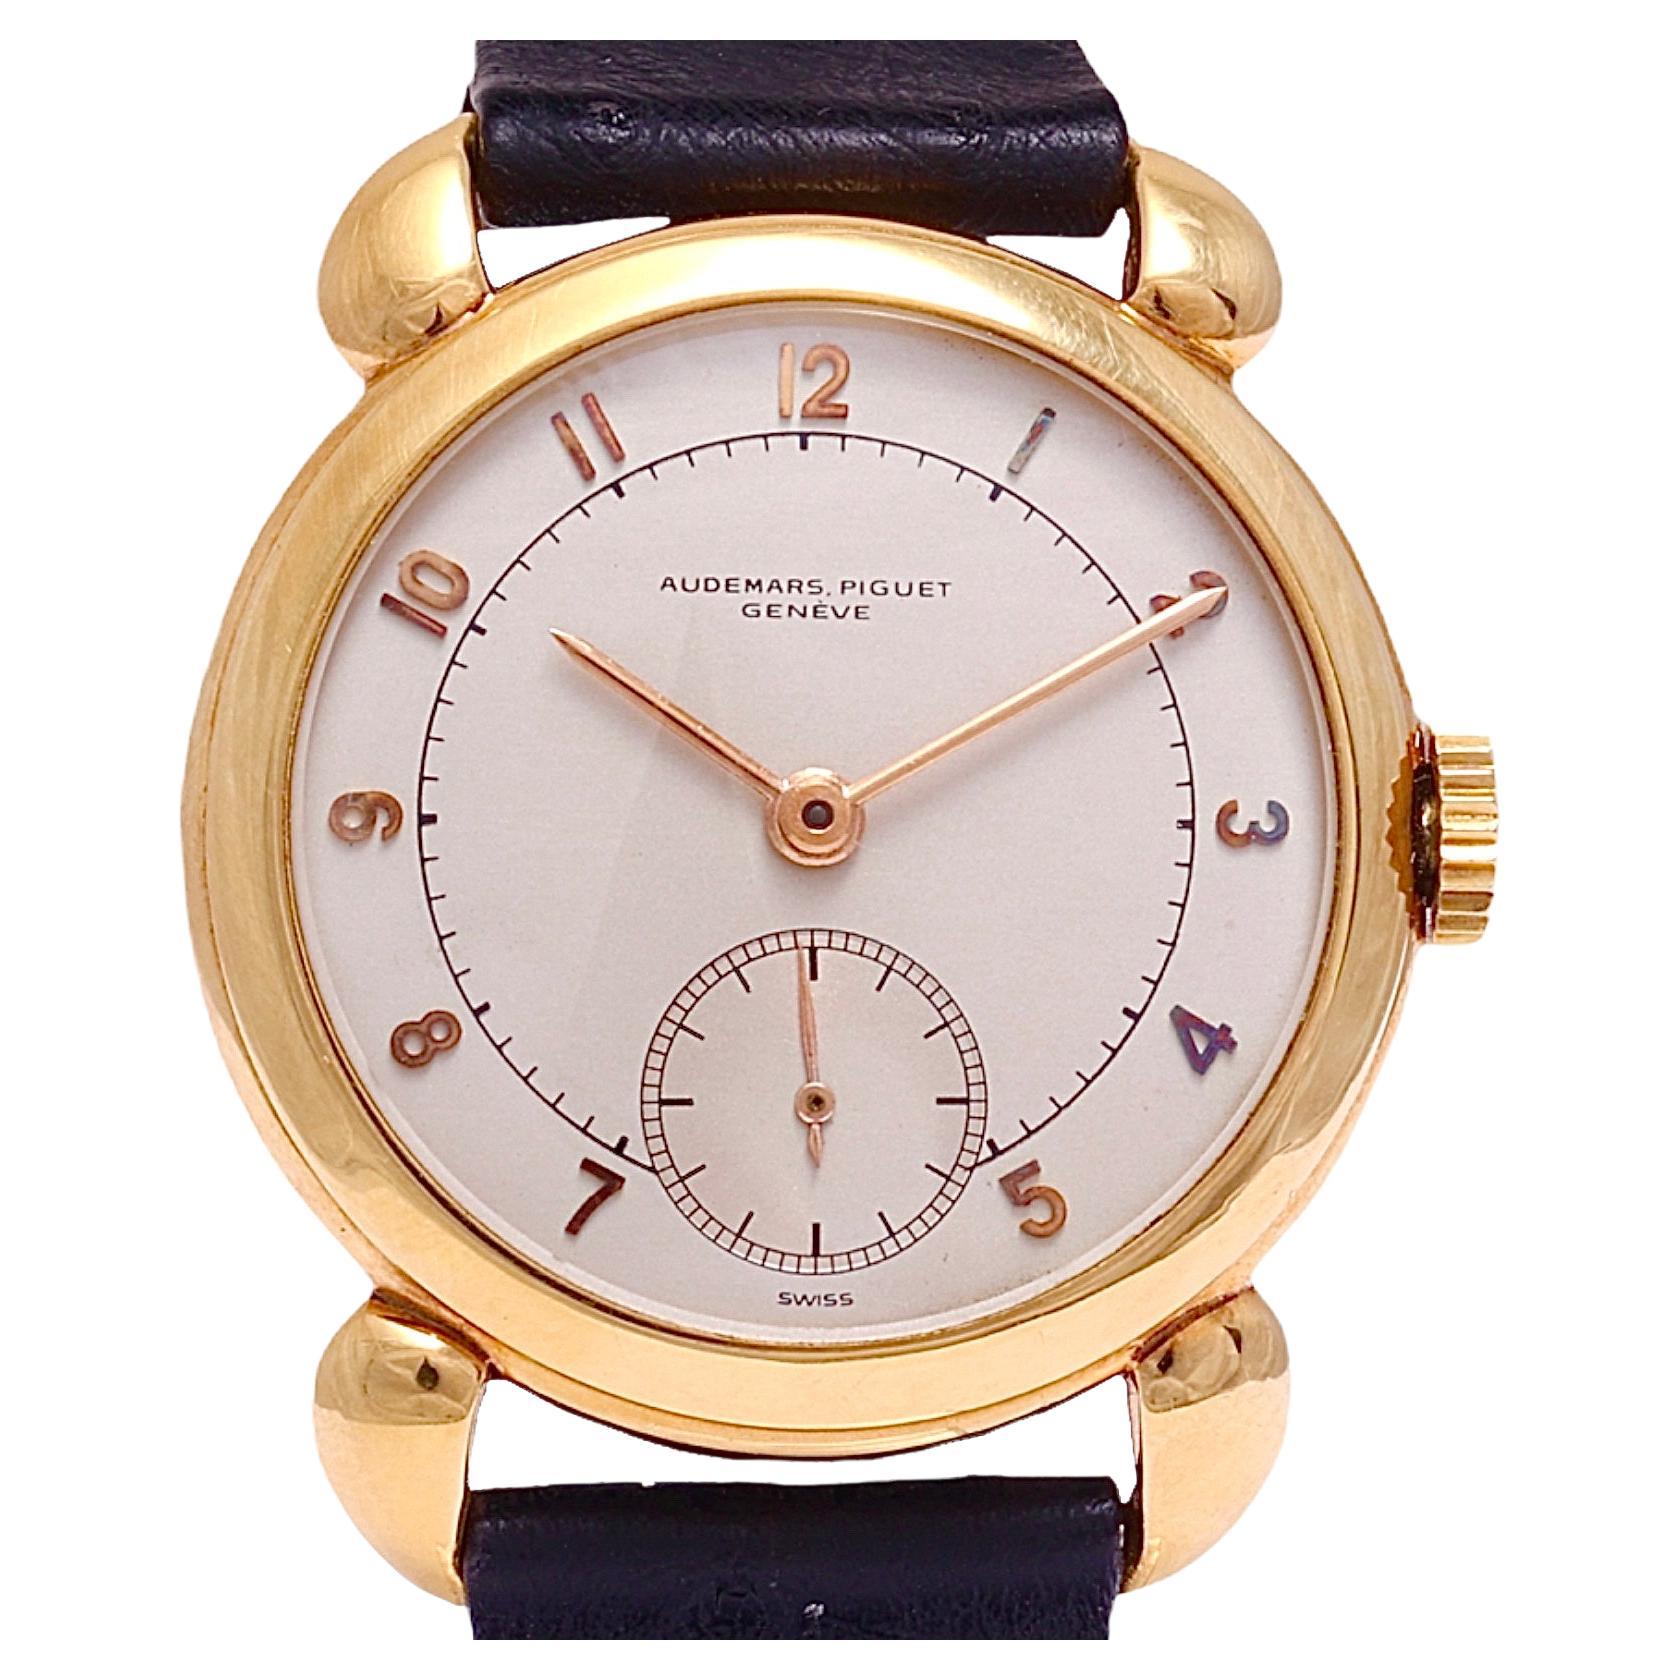 18 Karat Gold Audemars Piguet Calatrava Vintage Seltene Sammler-Armbanduhr 1940er Jahre